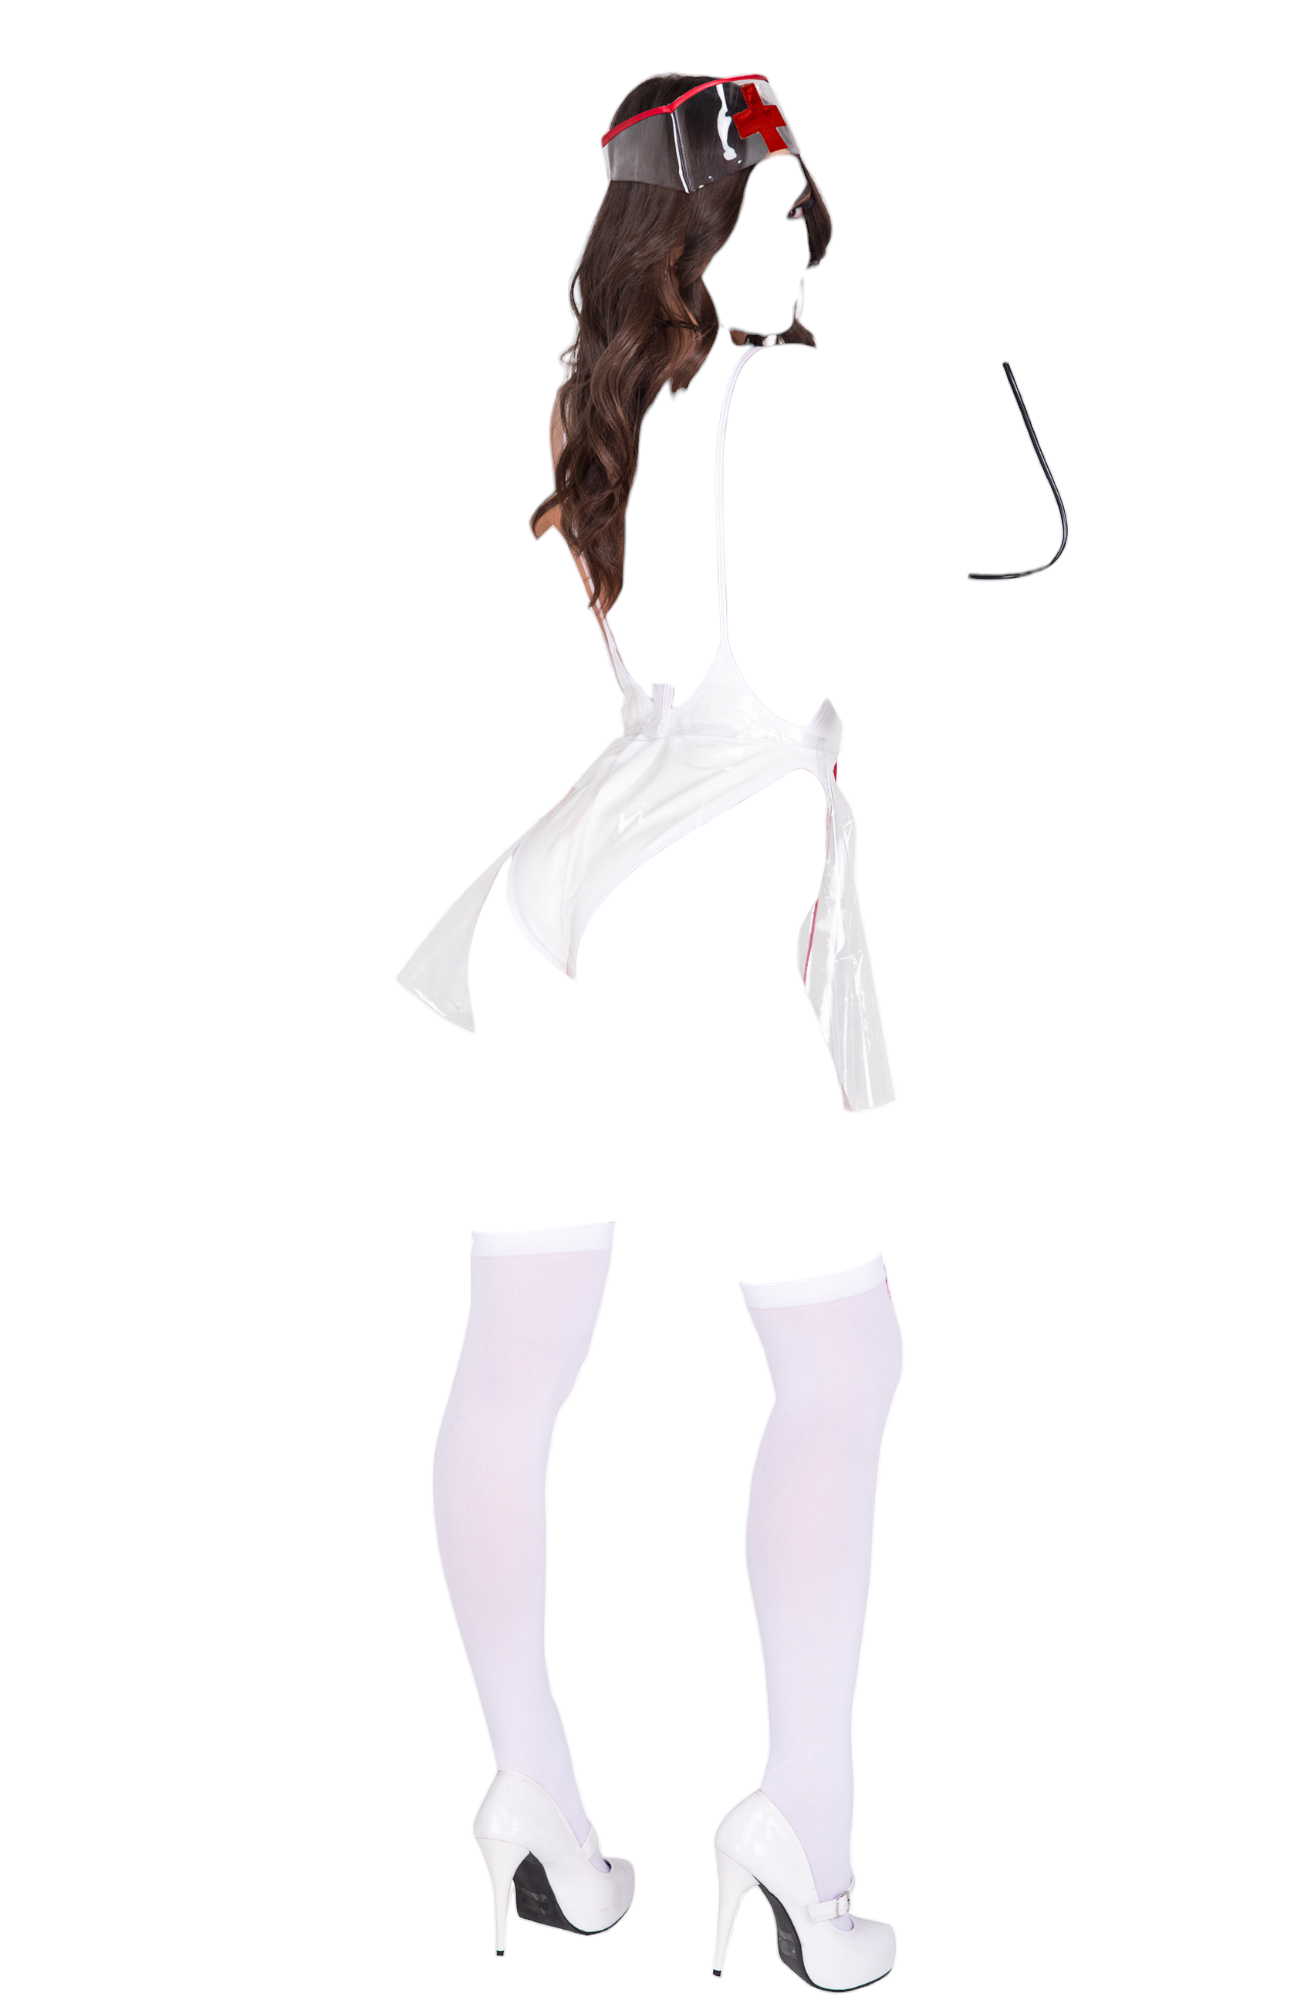 Roma Costume 4 PC Naughty Nurse Wetlook Romper White/Red